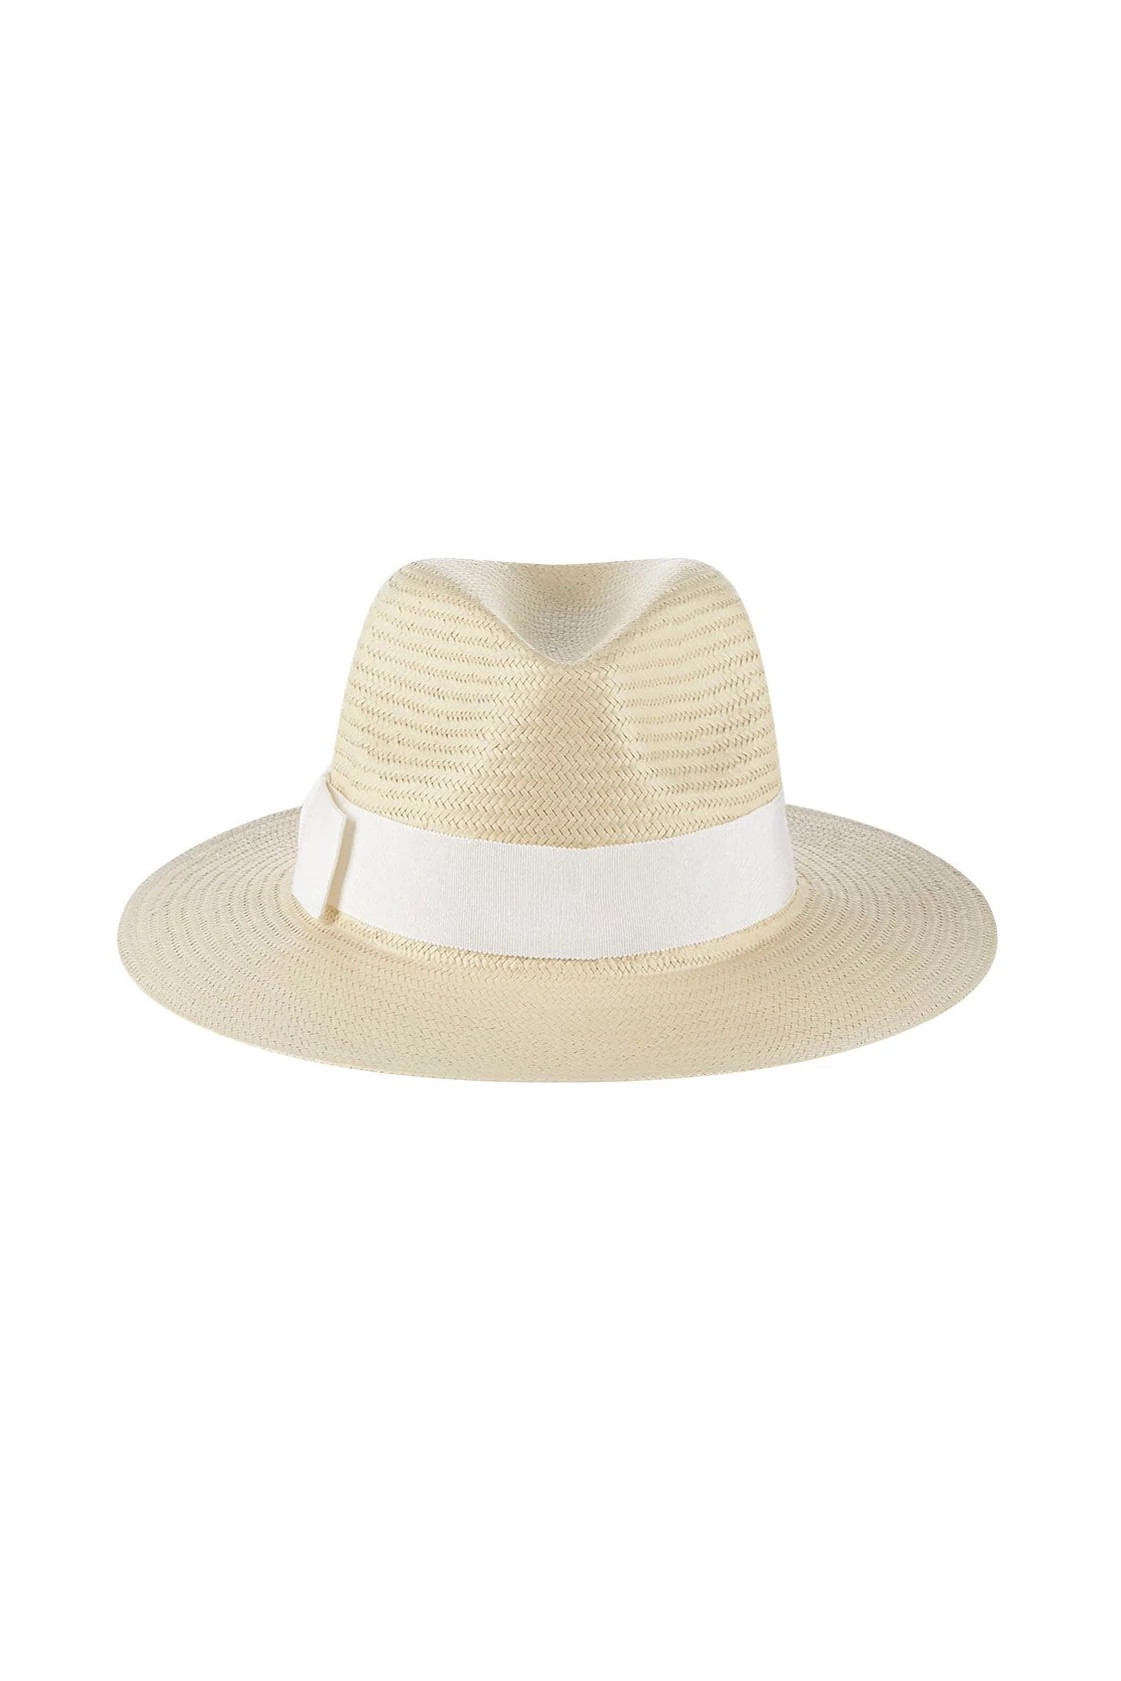 NATURAL/WHITE Panama Hat image number 1